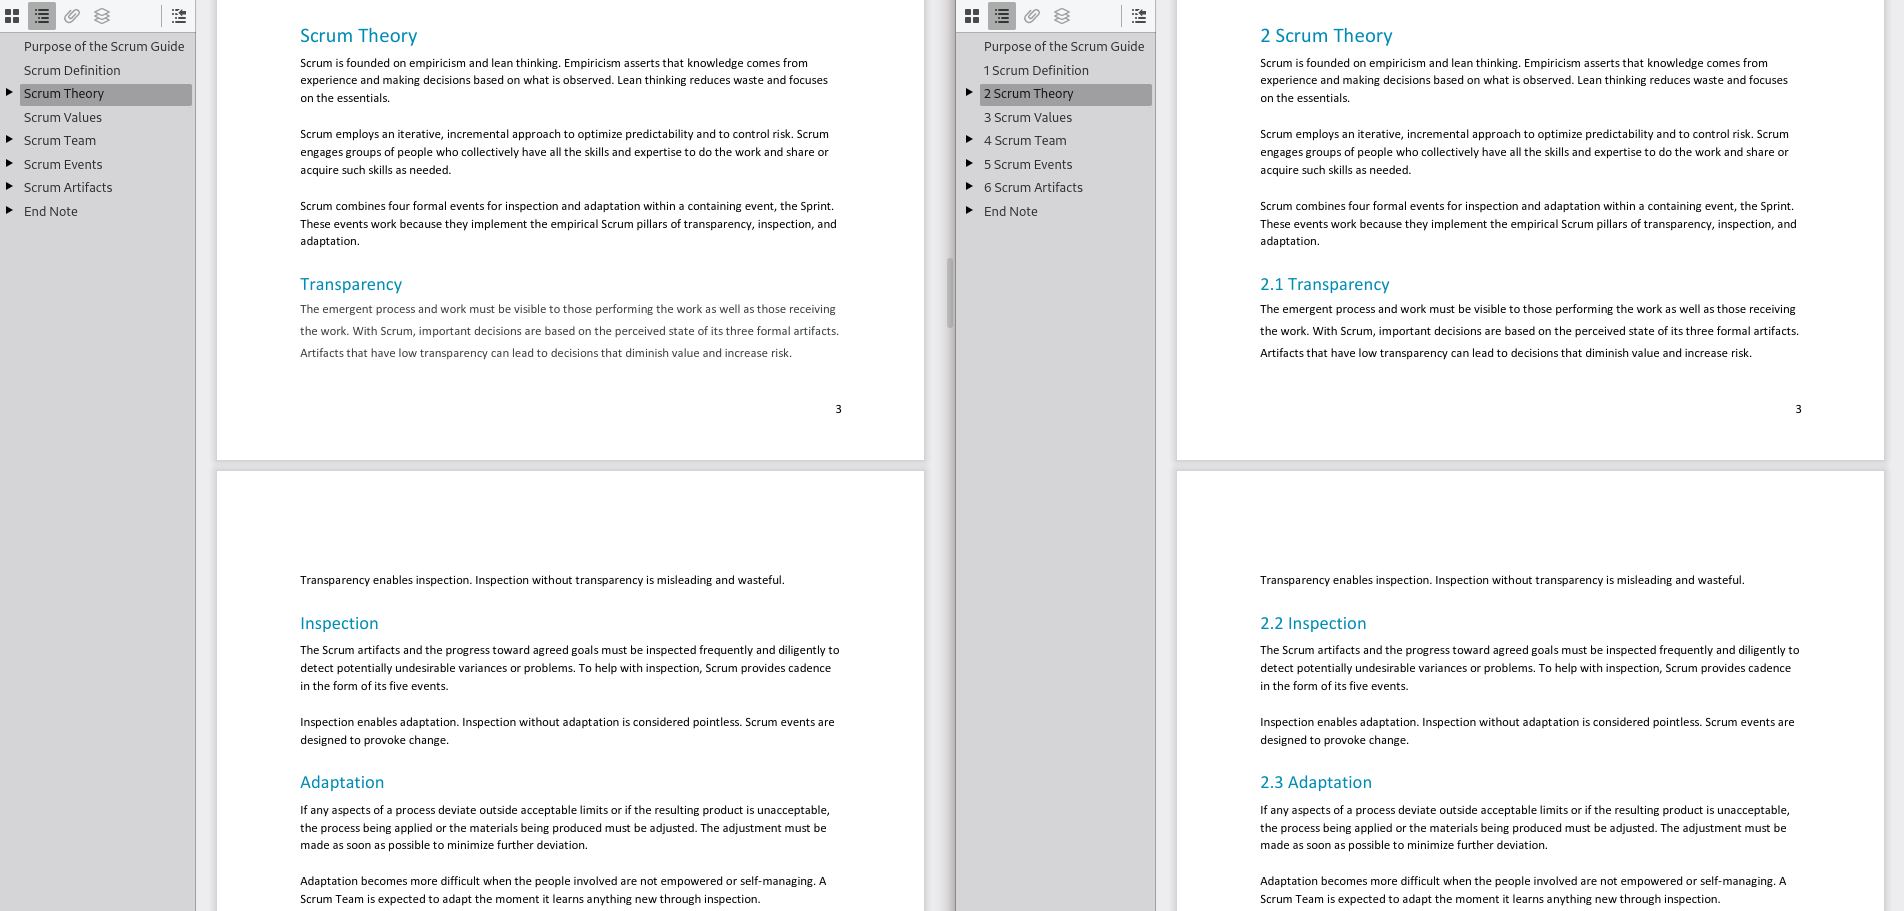 Comparison between original and edited PDF